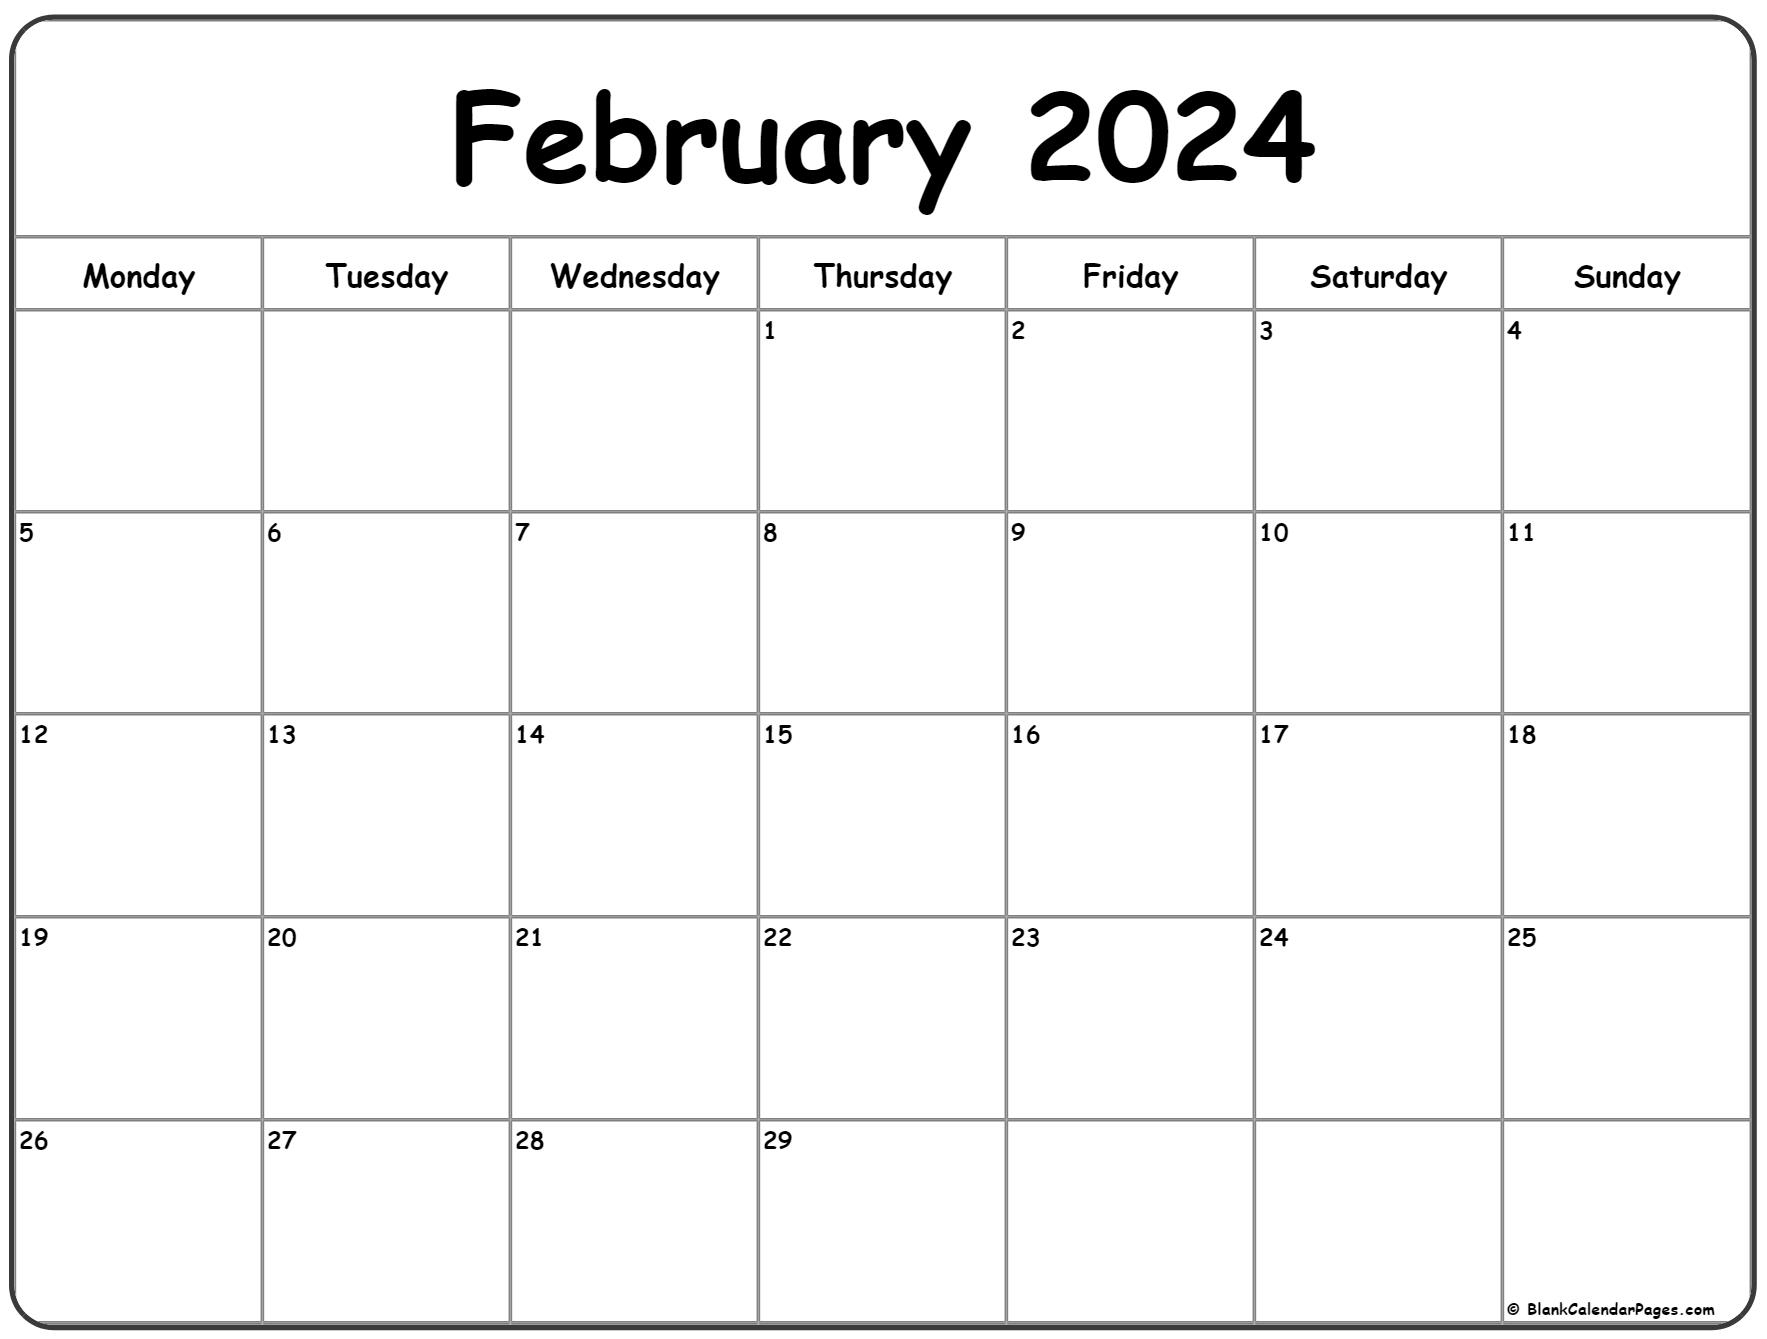 February 2024 Monday Calendar | Monday To Sunday for Free February 2024 Calendar Printable